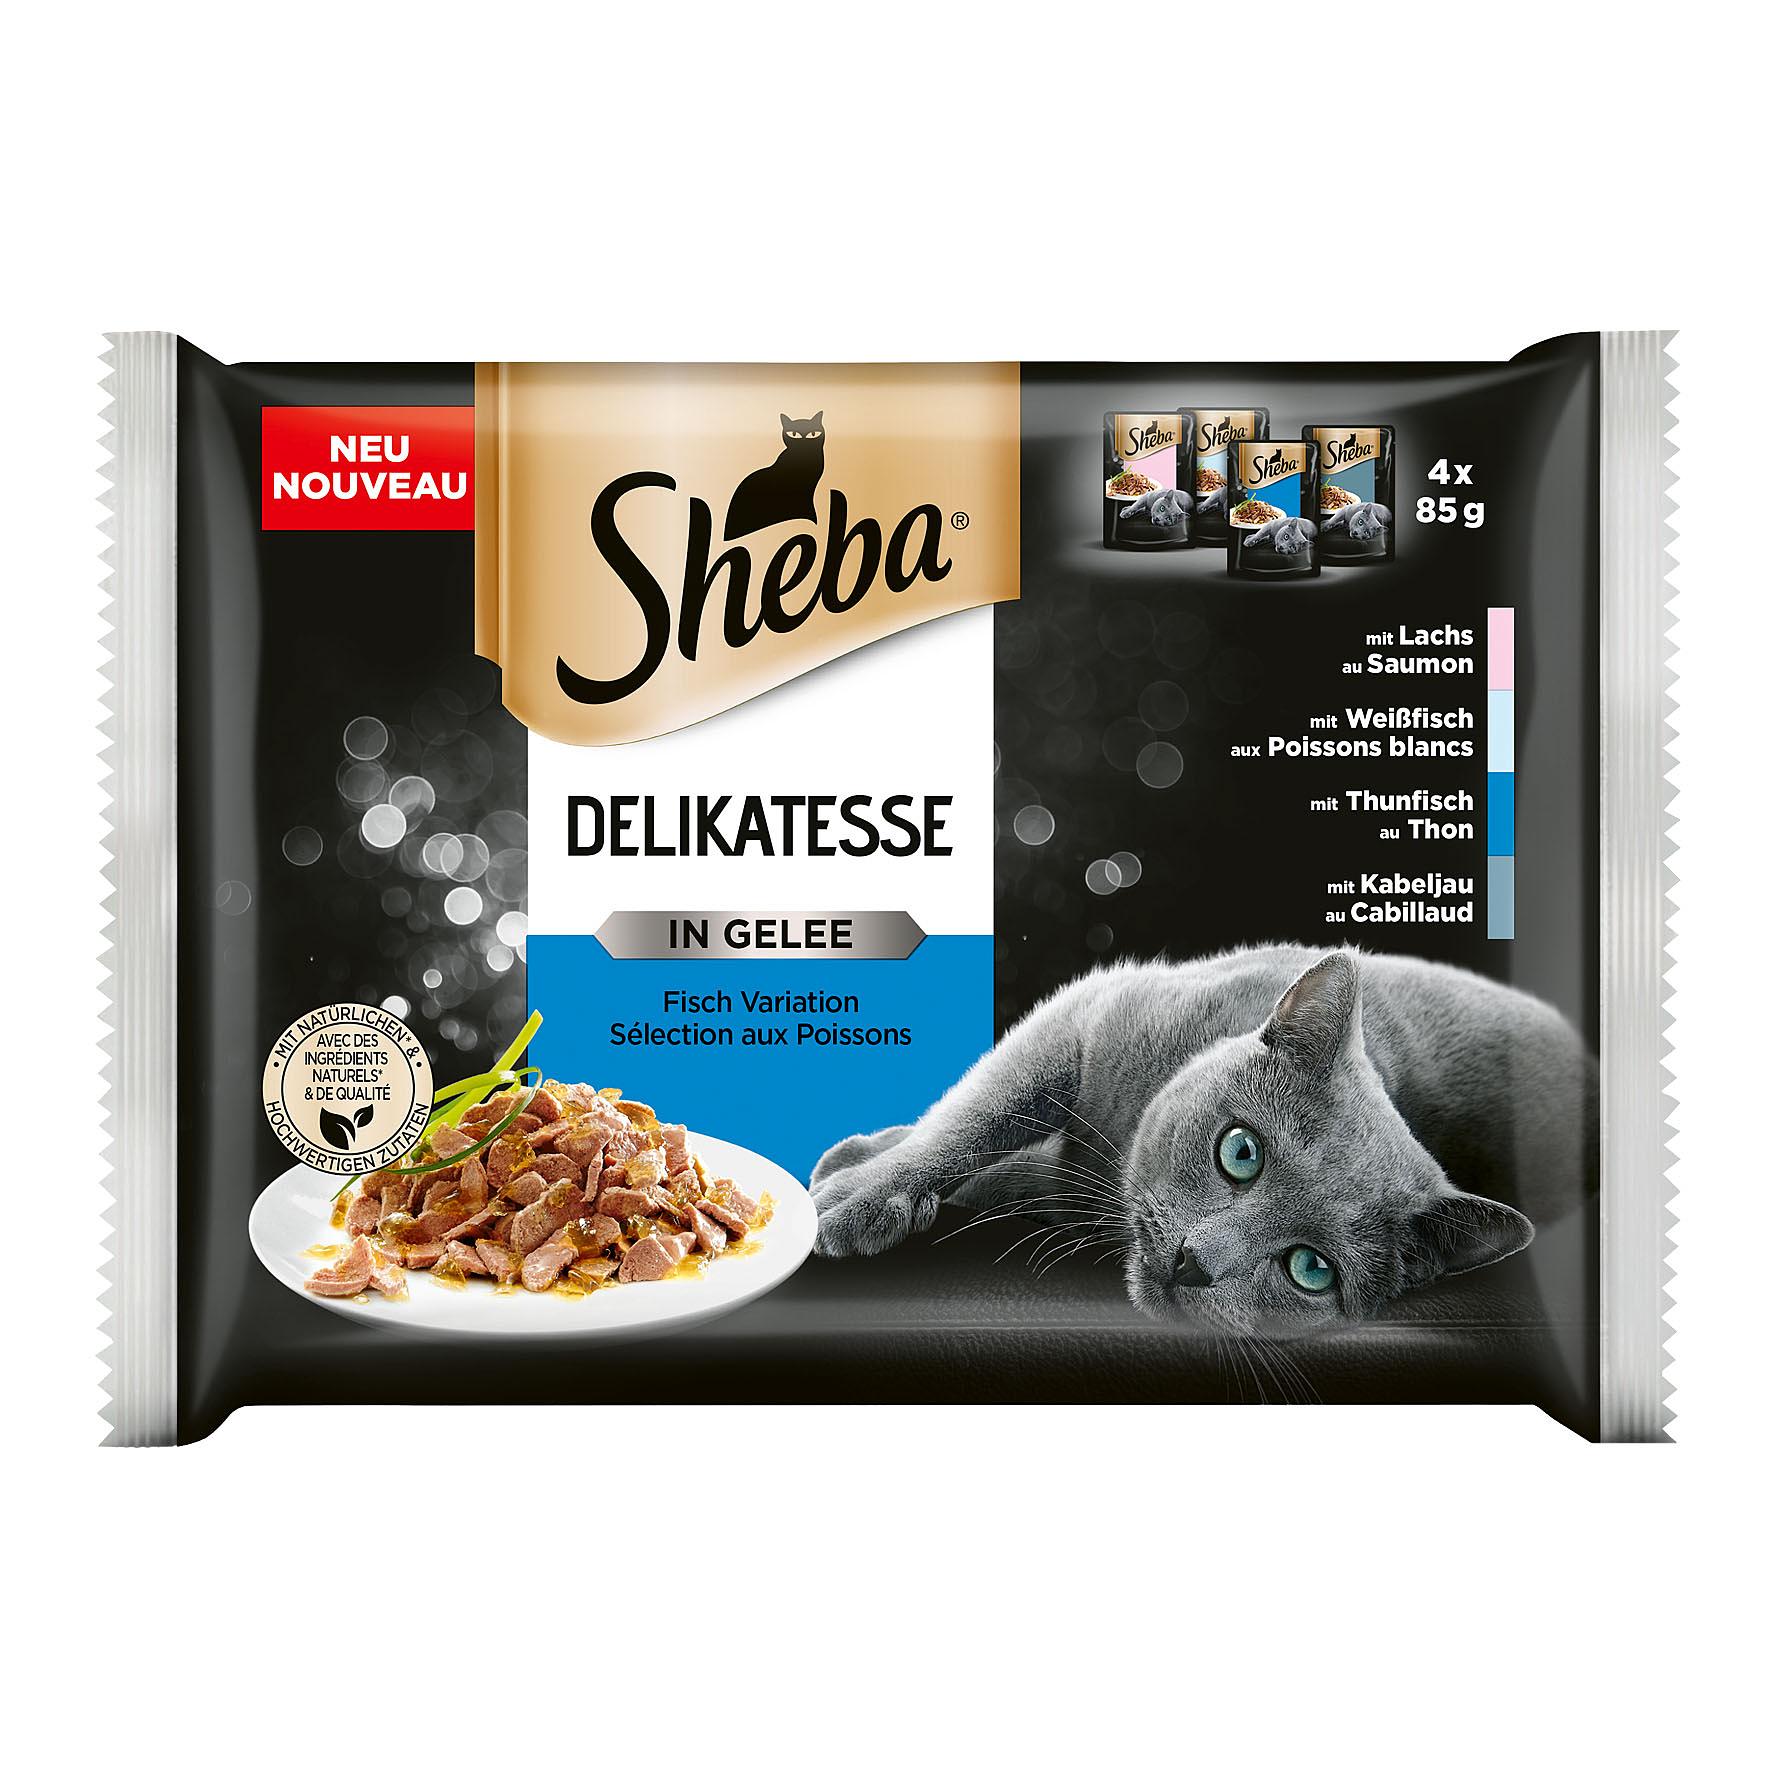 Sheba Delikatesse in Gelee Fisch Variation, 4x85g